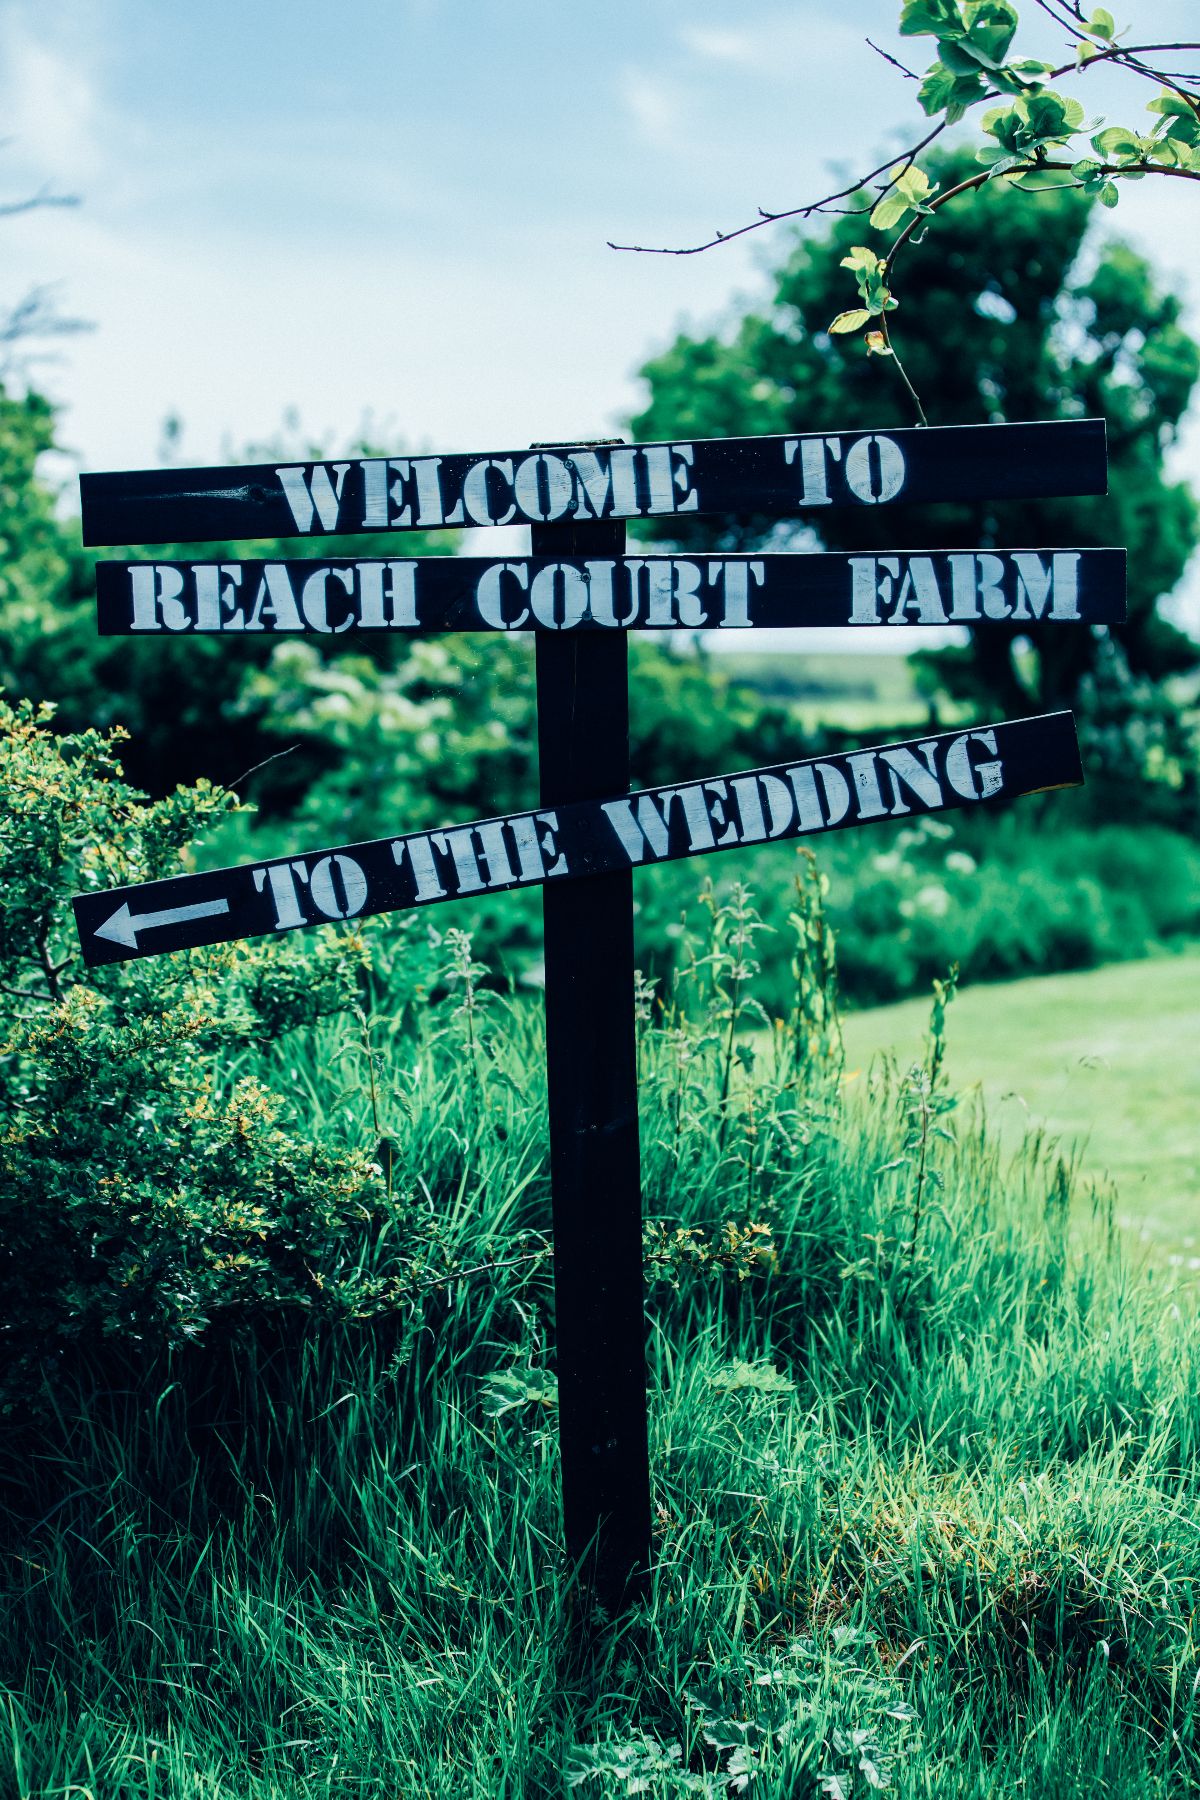 Gallery Item 81 for Reach Court Farm Weddings